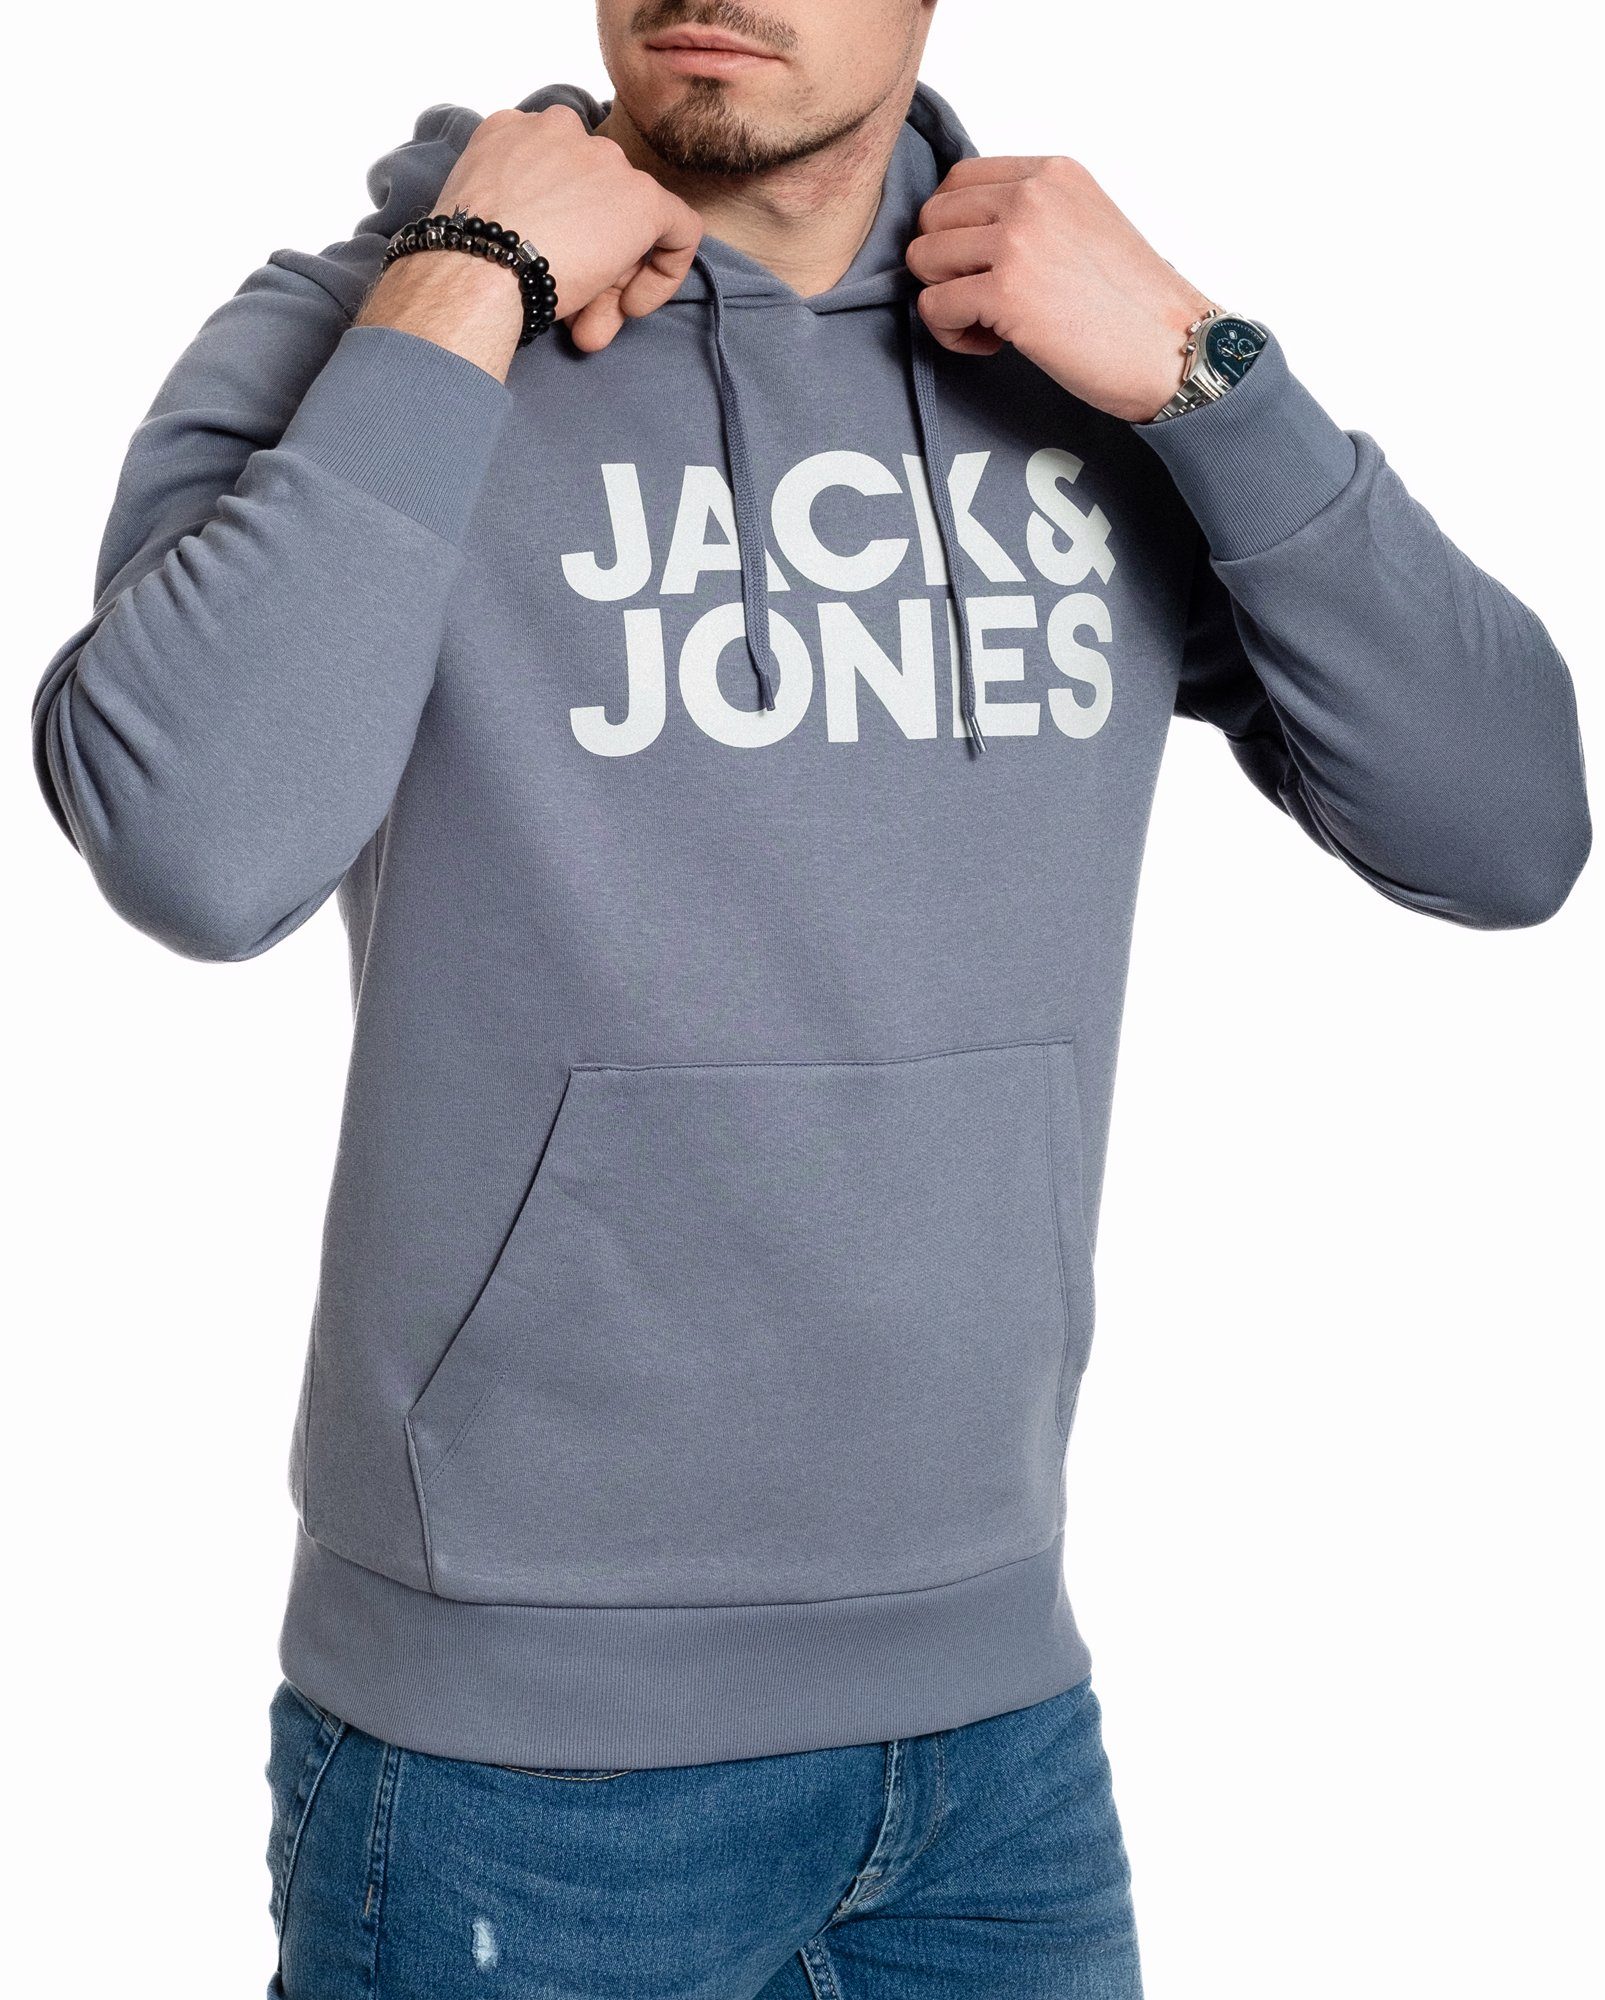 Jack & Kängurutasche Kapuzensweatshirt Jones mit Chinablue-White